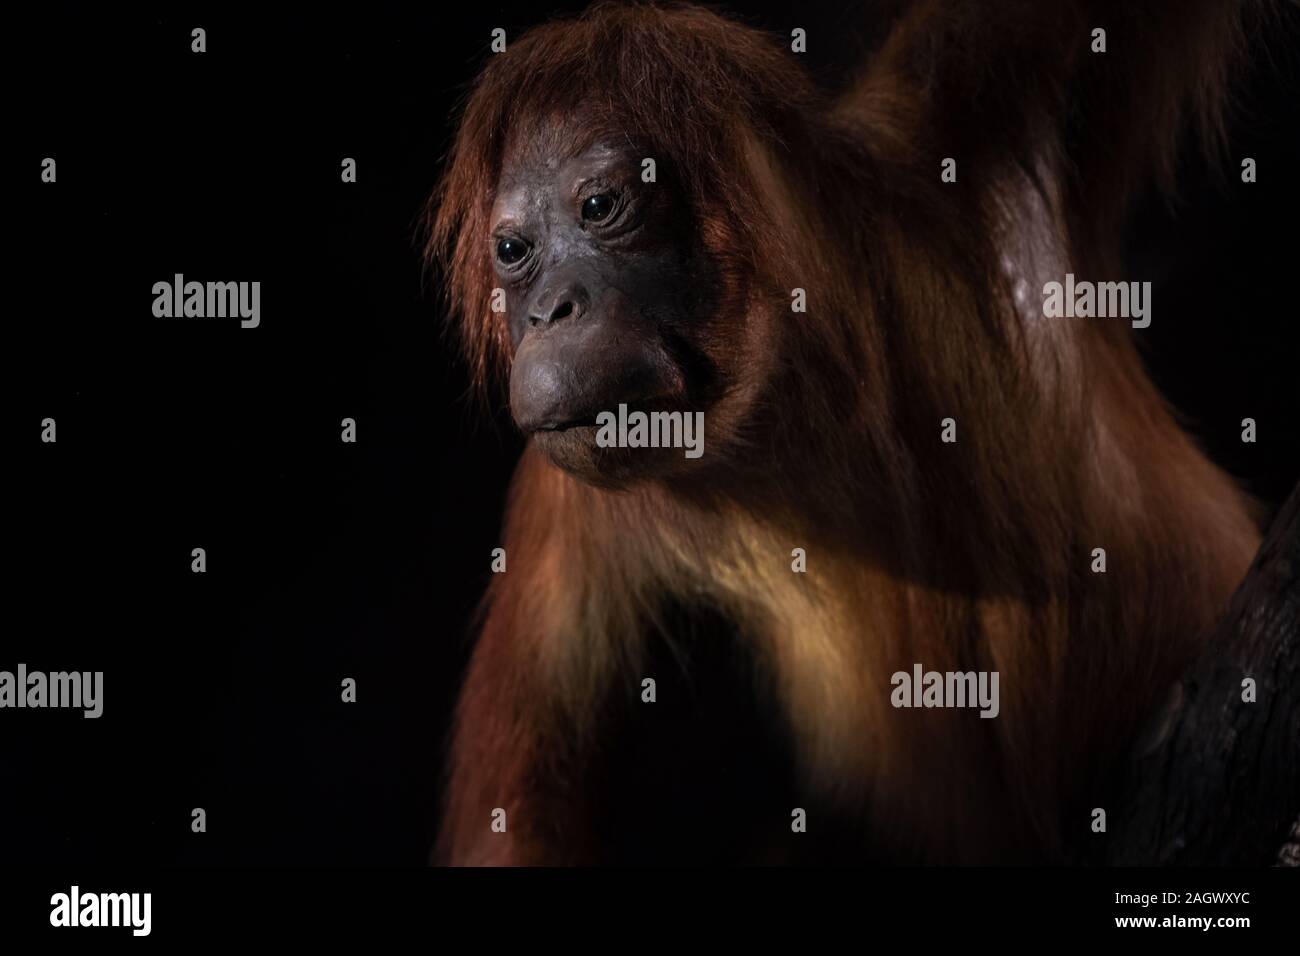 Mounted female orangutang taken in display with black background Stock Photo